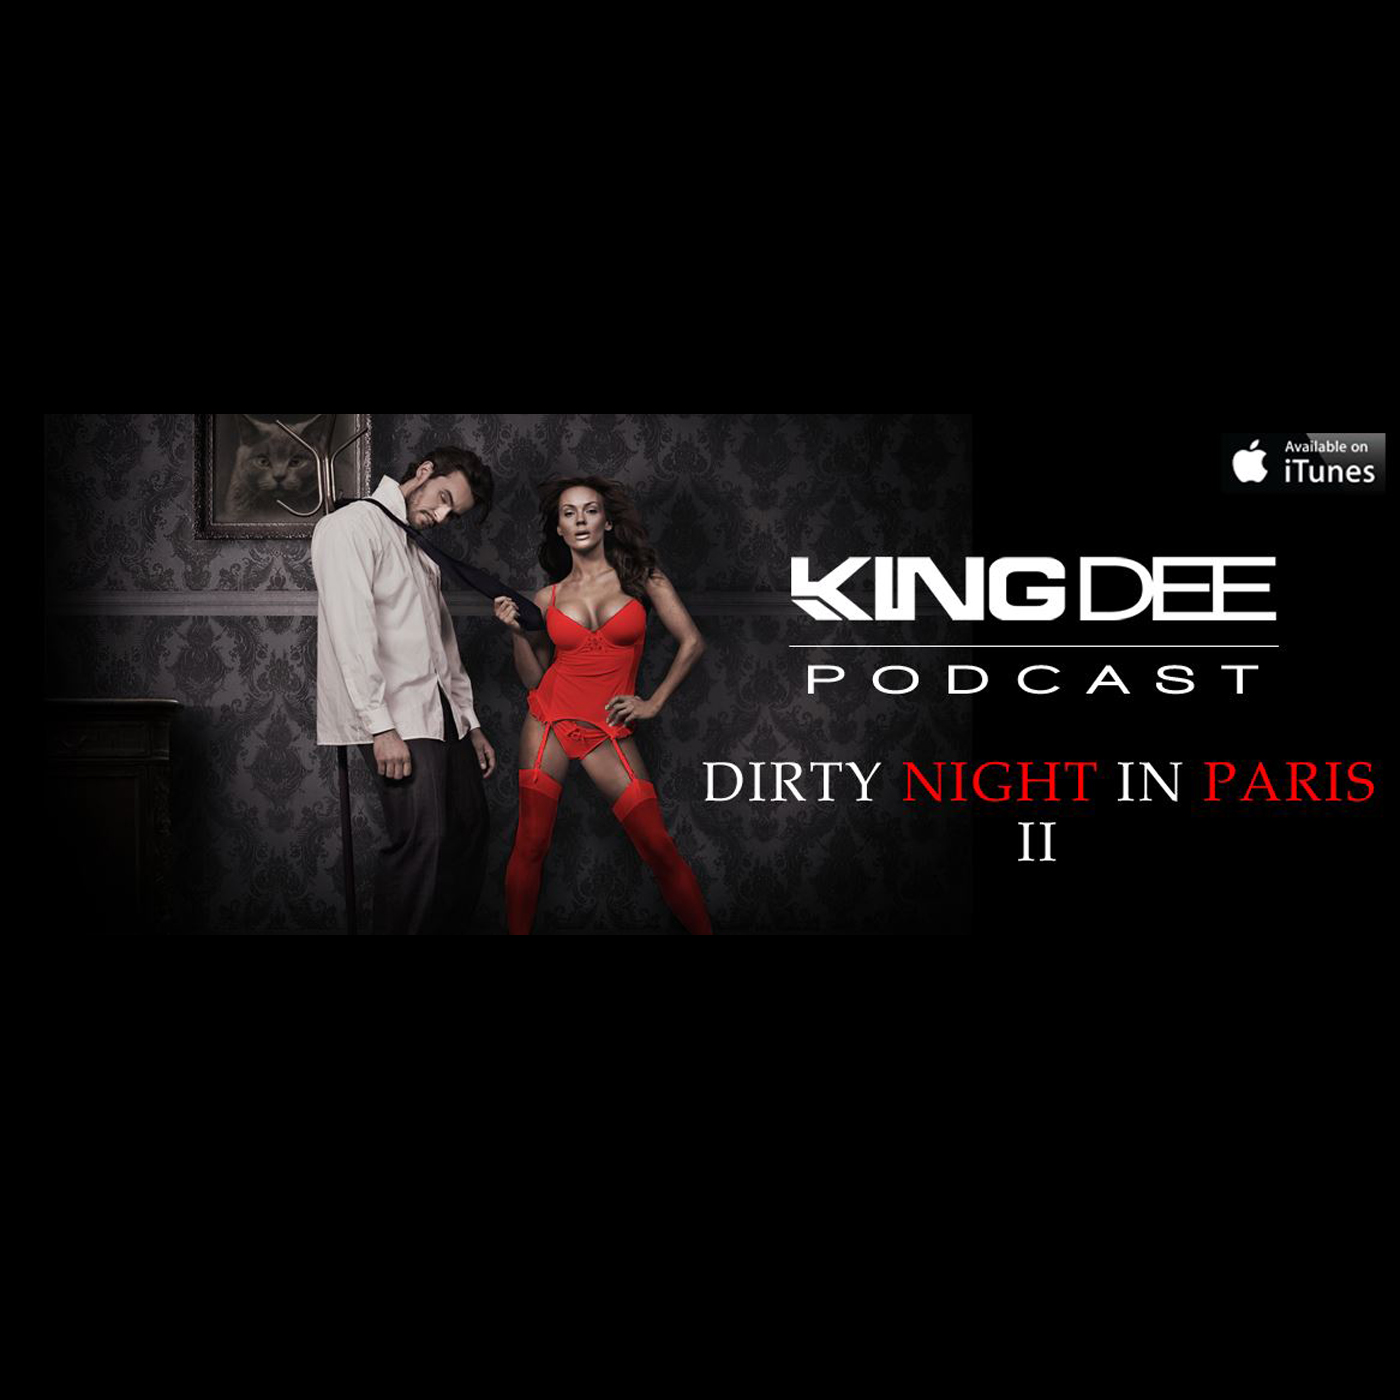 DJ KING DEE PODCAST - DIRTY NIGHT IN PARIS 2